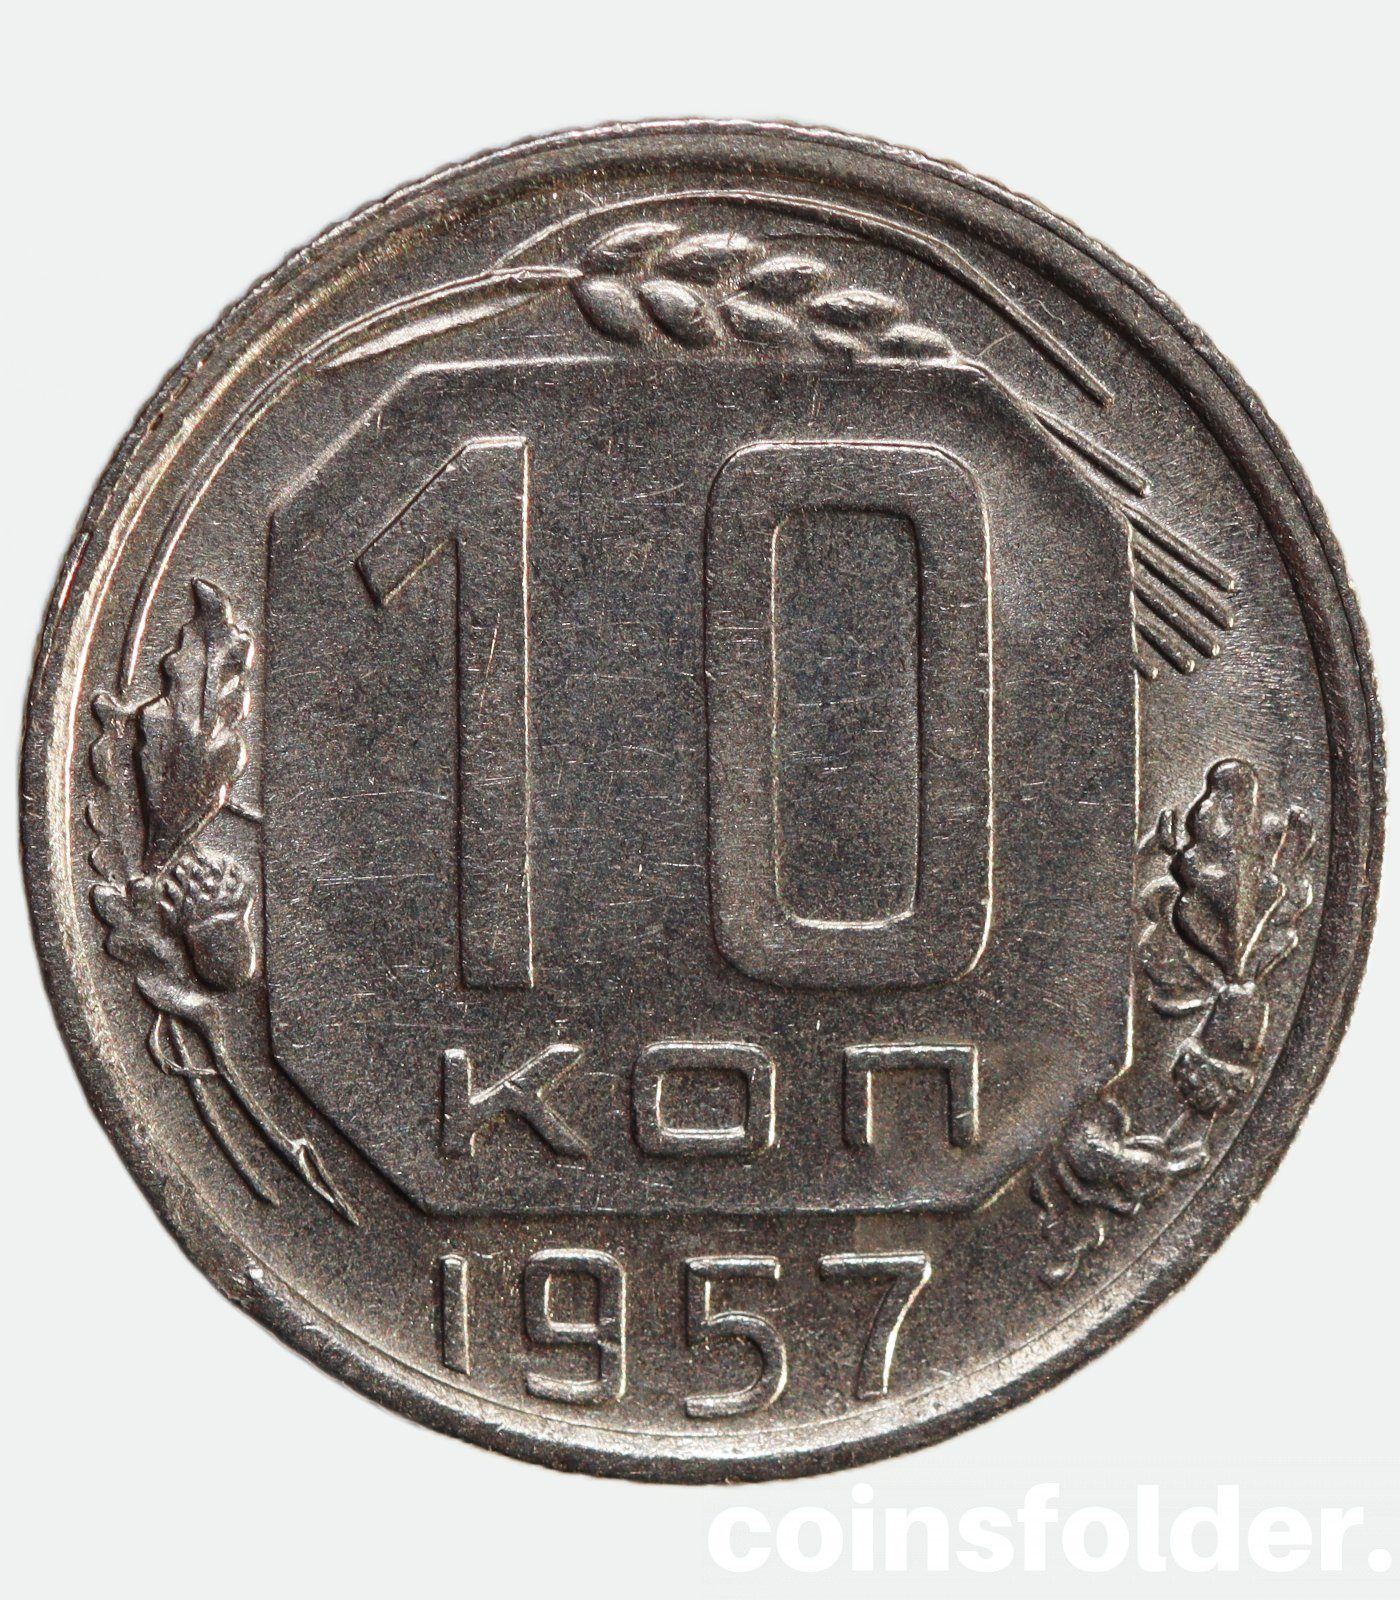 1957 ussr 10 kopecks